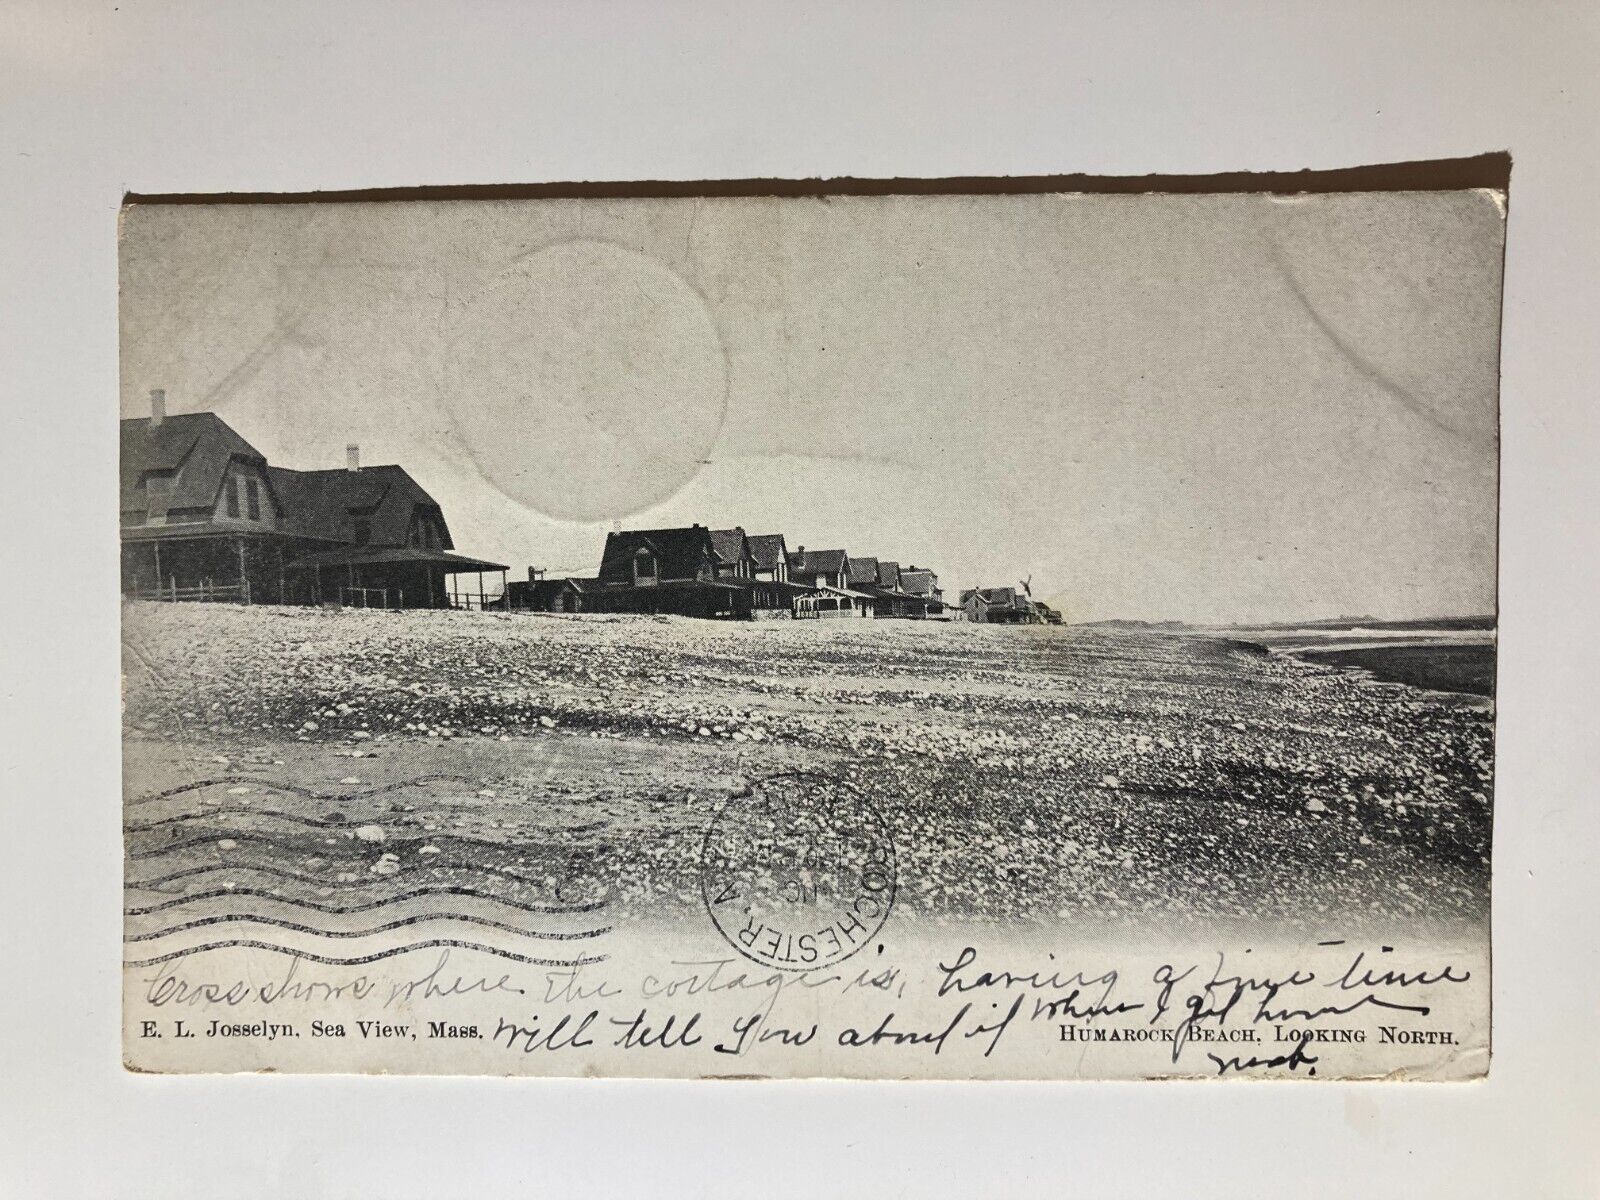 1907 E. L. Josselyn Sea View Massachusetts Scenic Photo Postcard